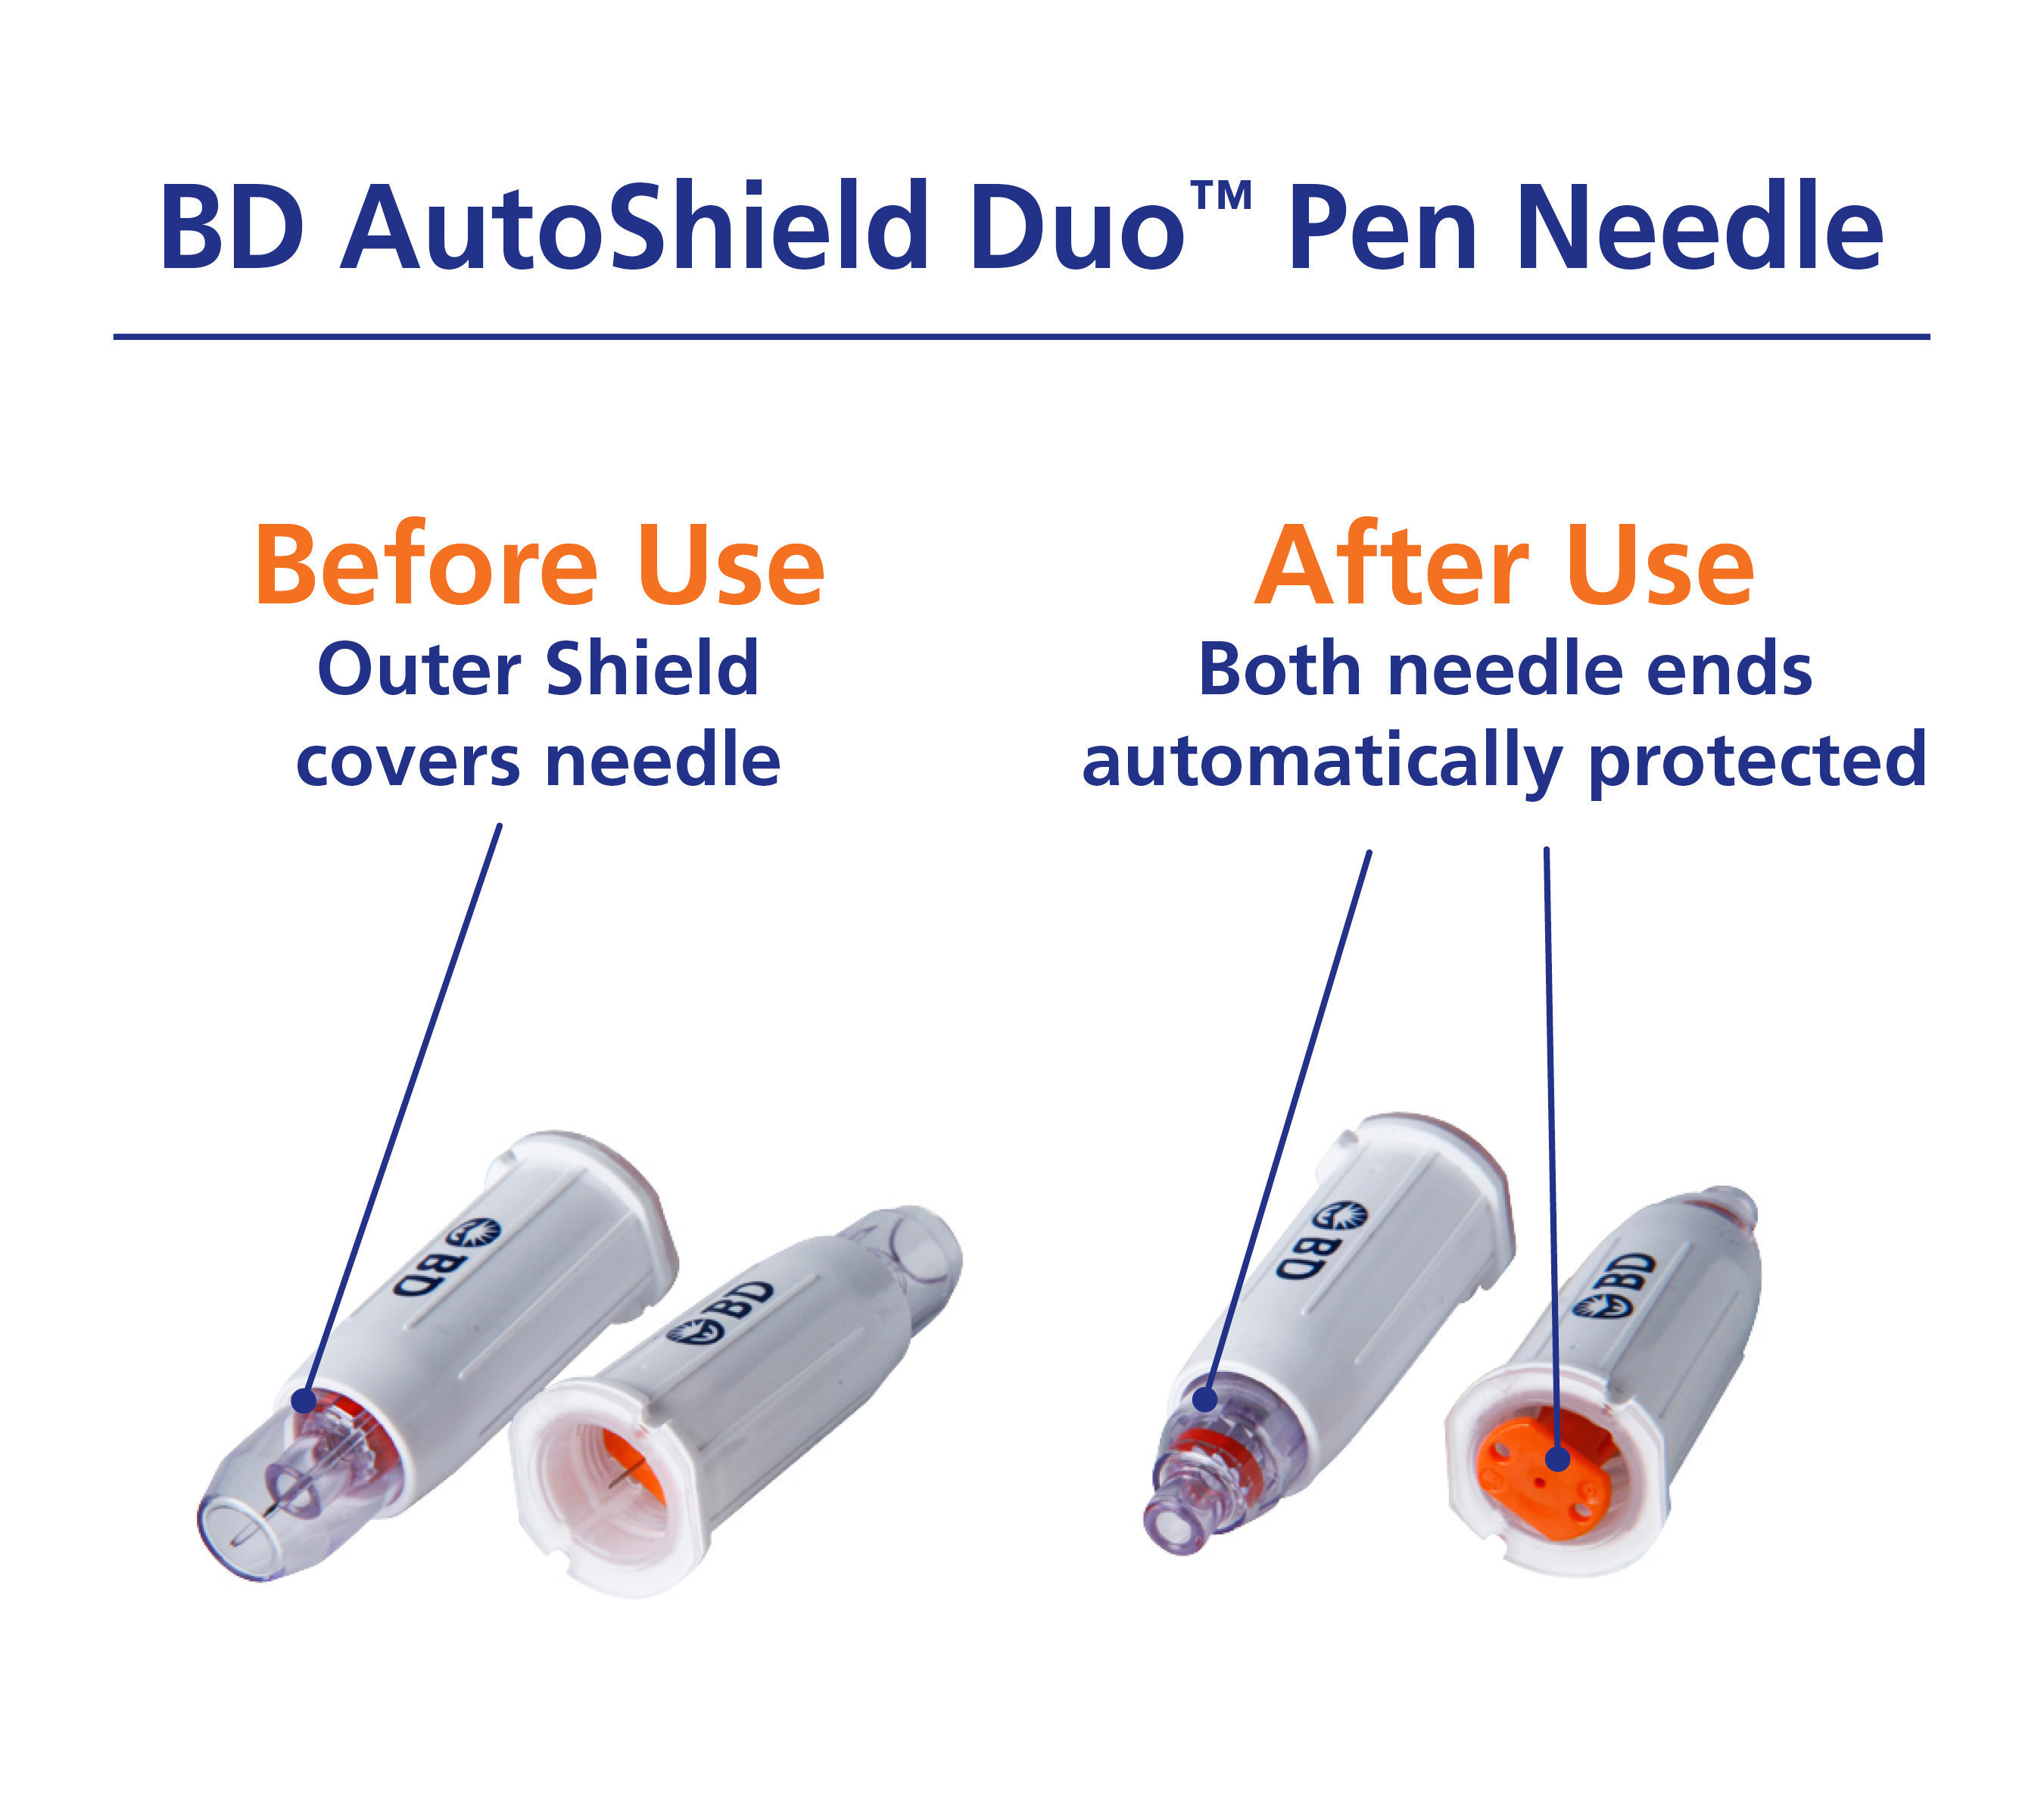 BD AutoShield Duo (TM) Pen Needle